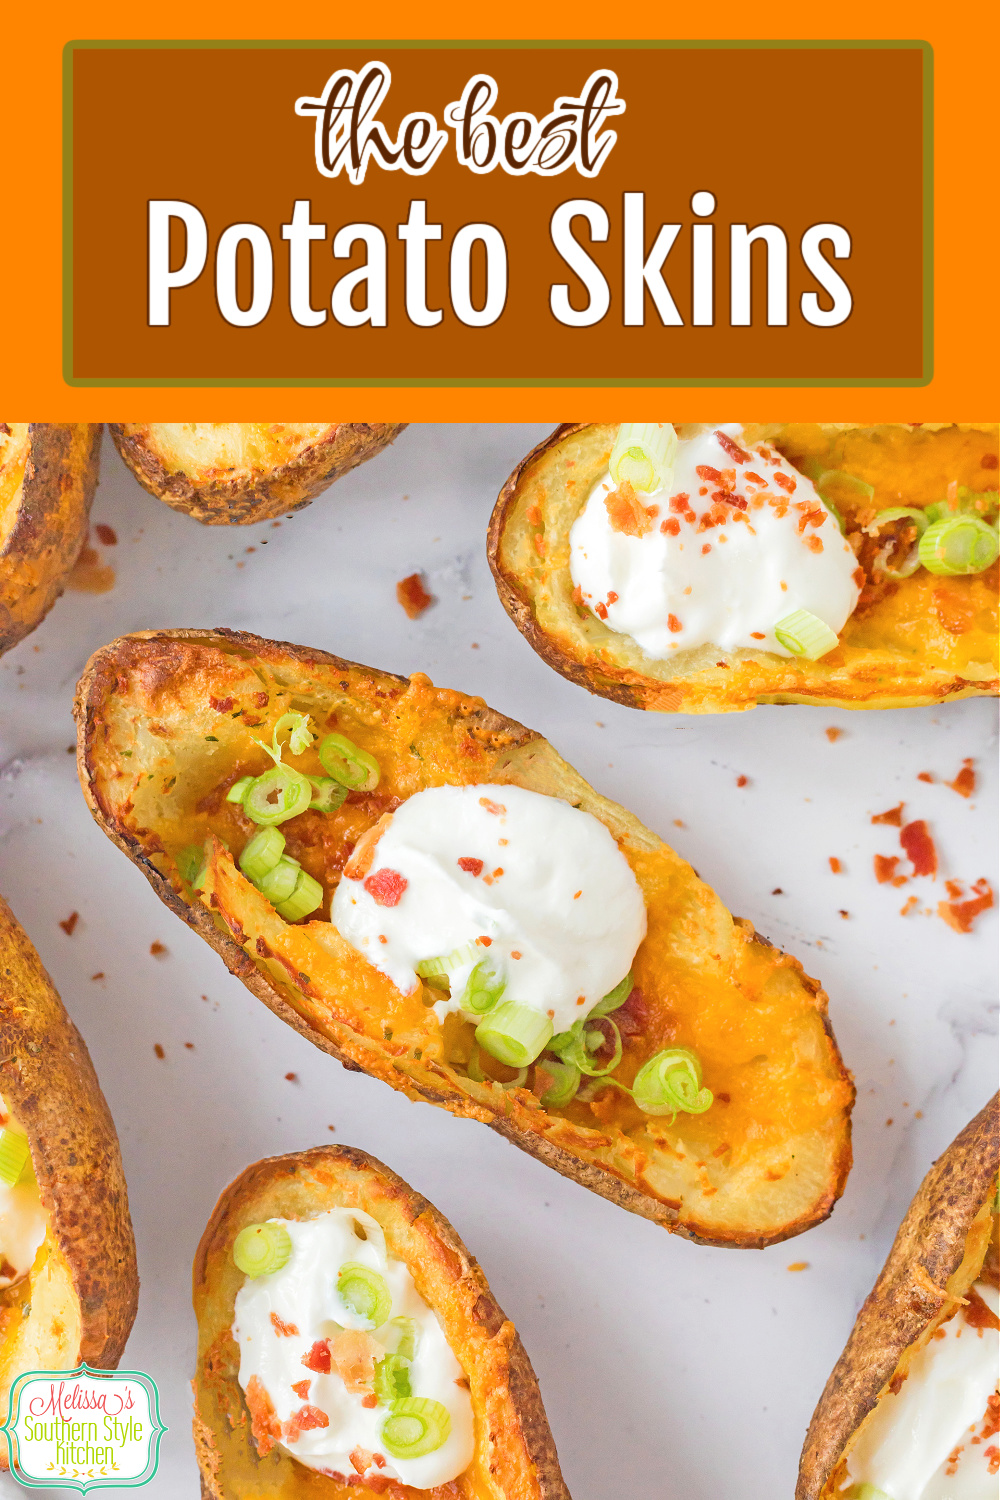 This Potato Skins Recipe will make the perfect addition to your party foods menu! #potatoskins #easypotatorecipes #potatoes #sidedishrecipes #appetizers #potatoappetizers via @melissasssk